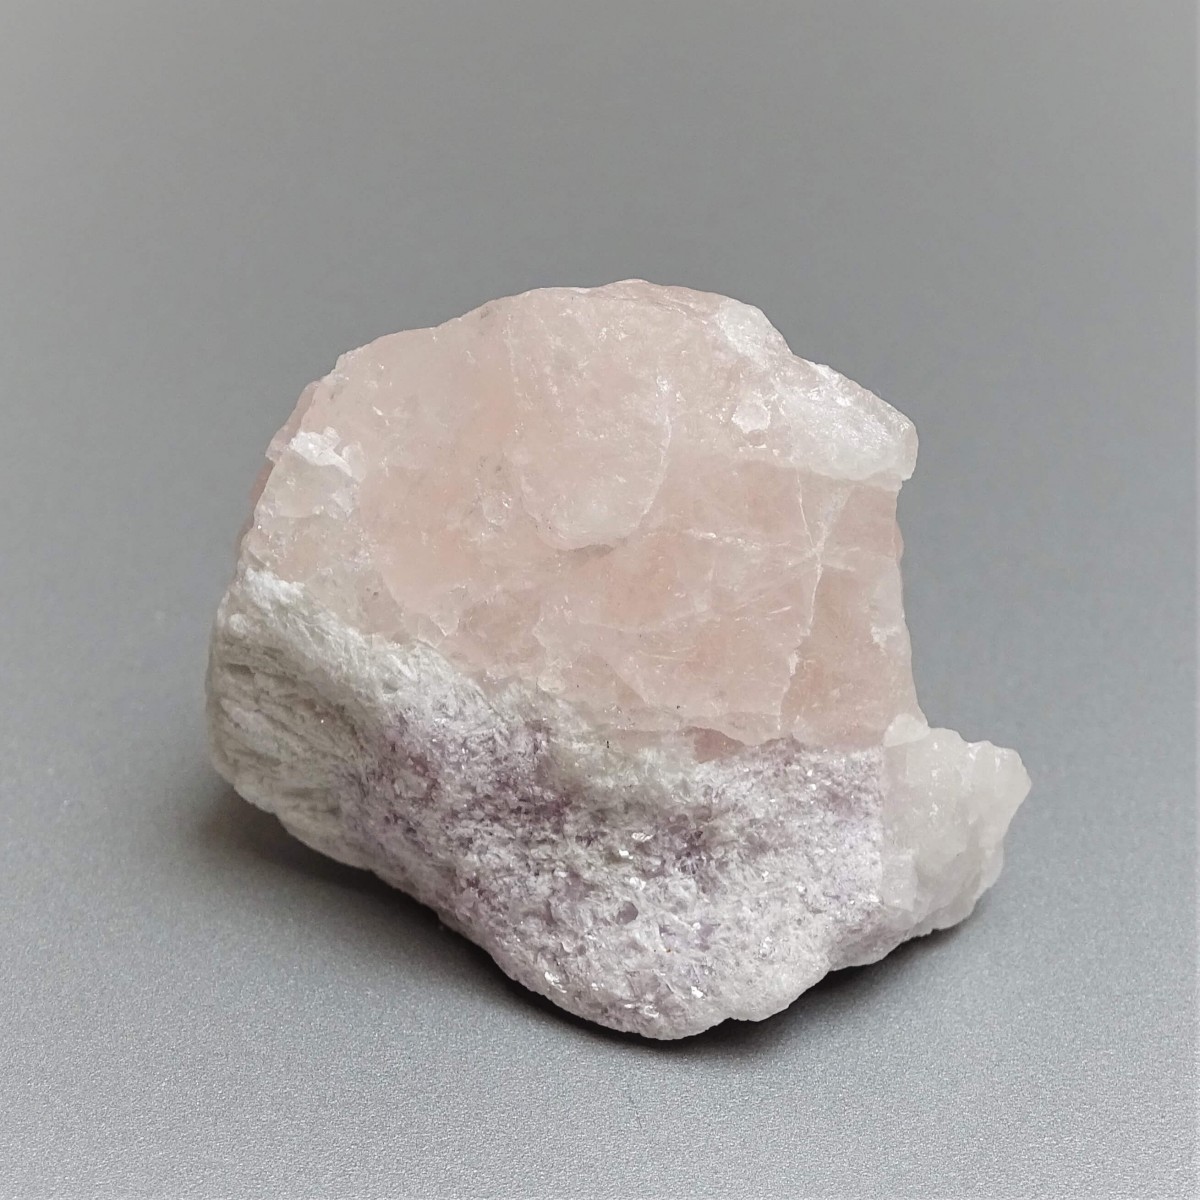 Morganite natural crystal 64.4g, Afghanistan